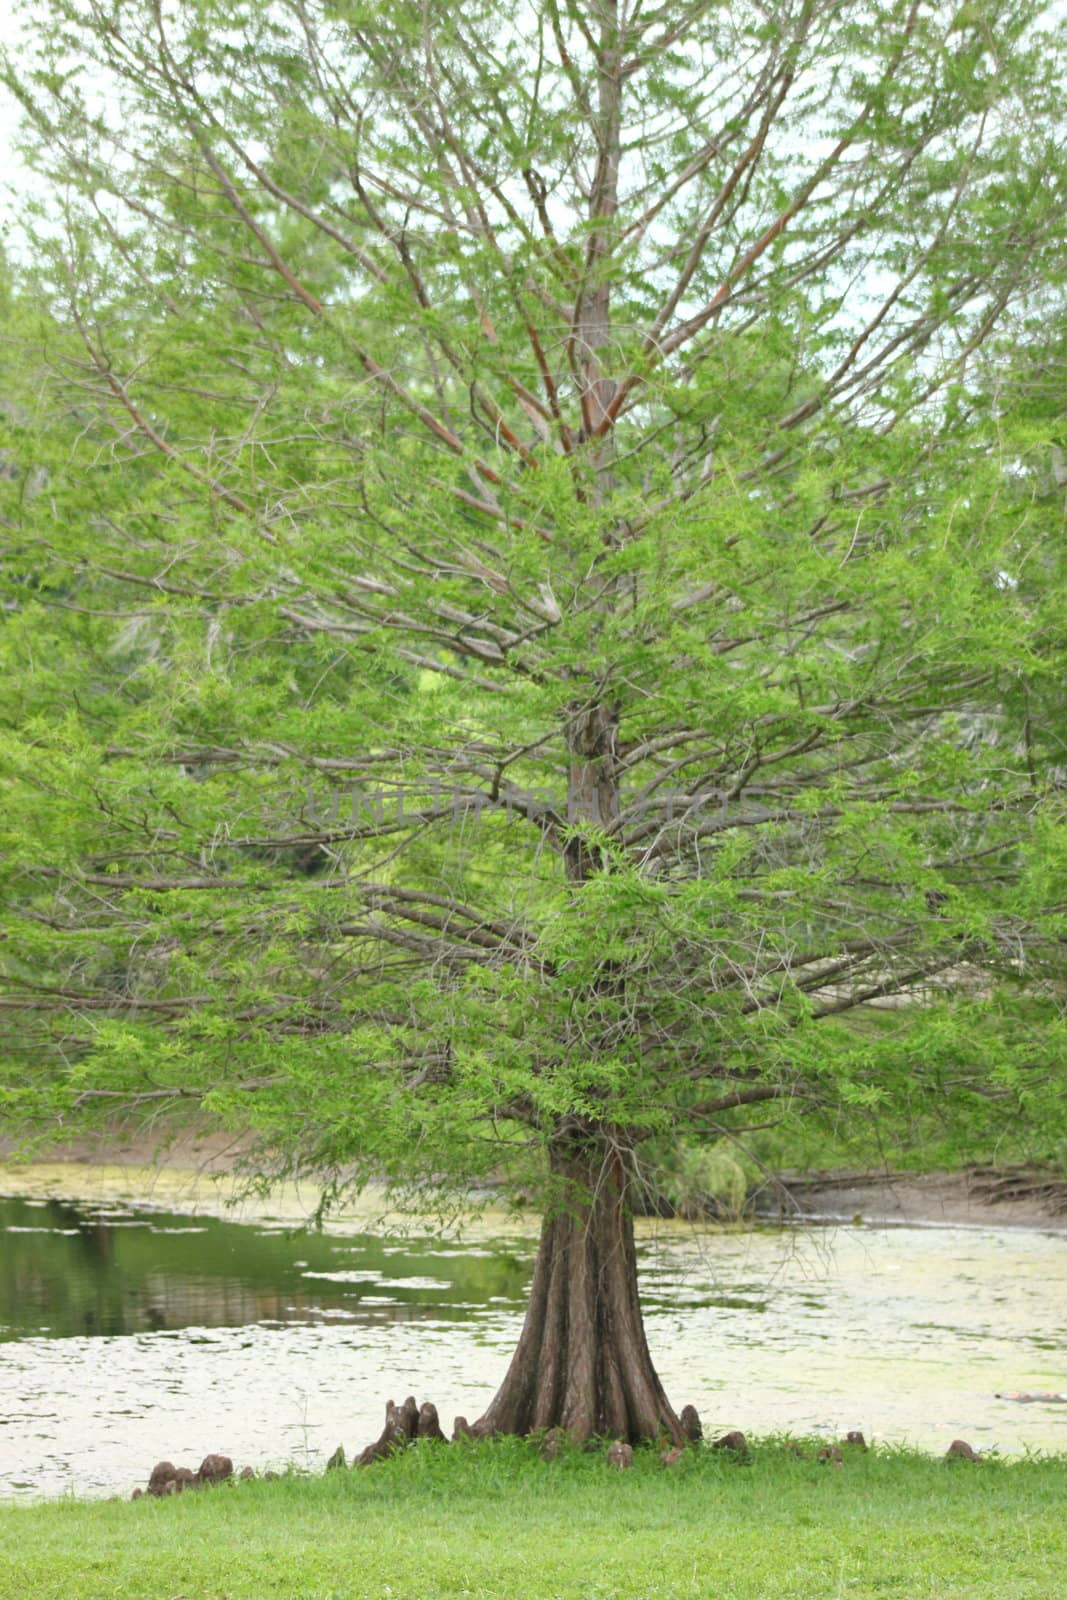 Bald Cyprus tree planted near a pond.